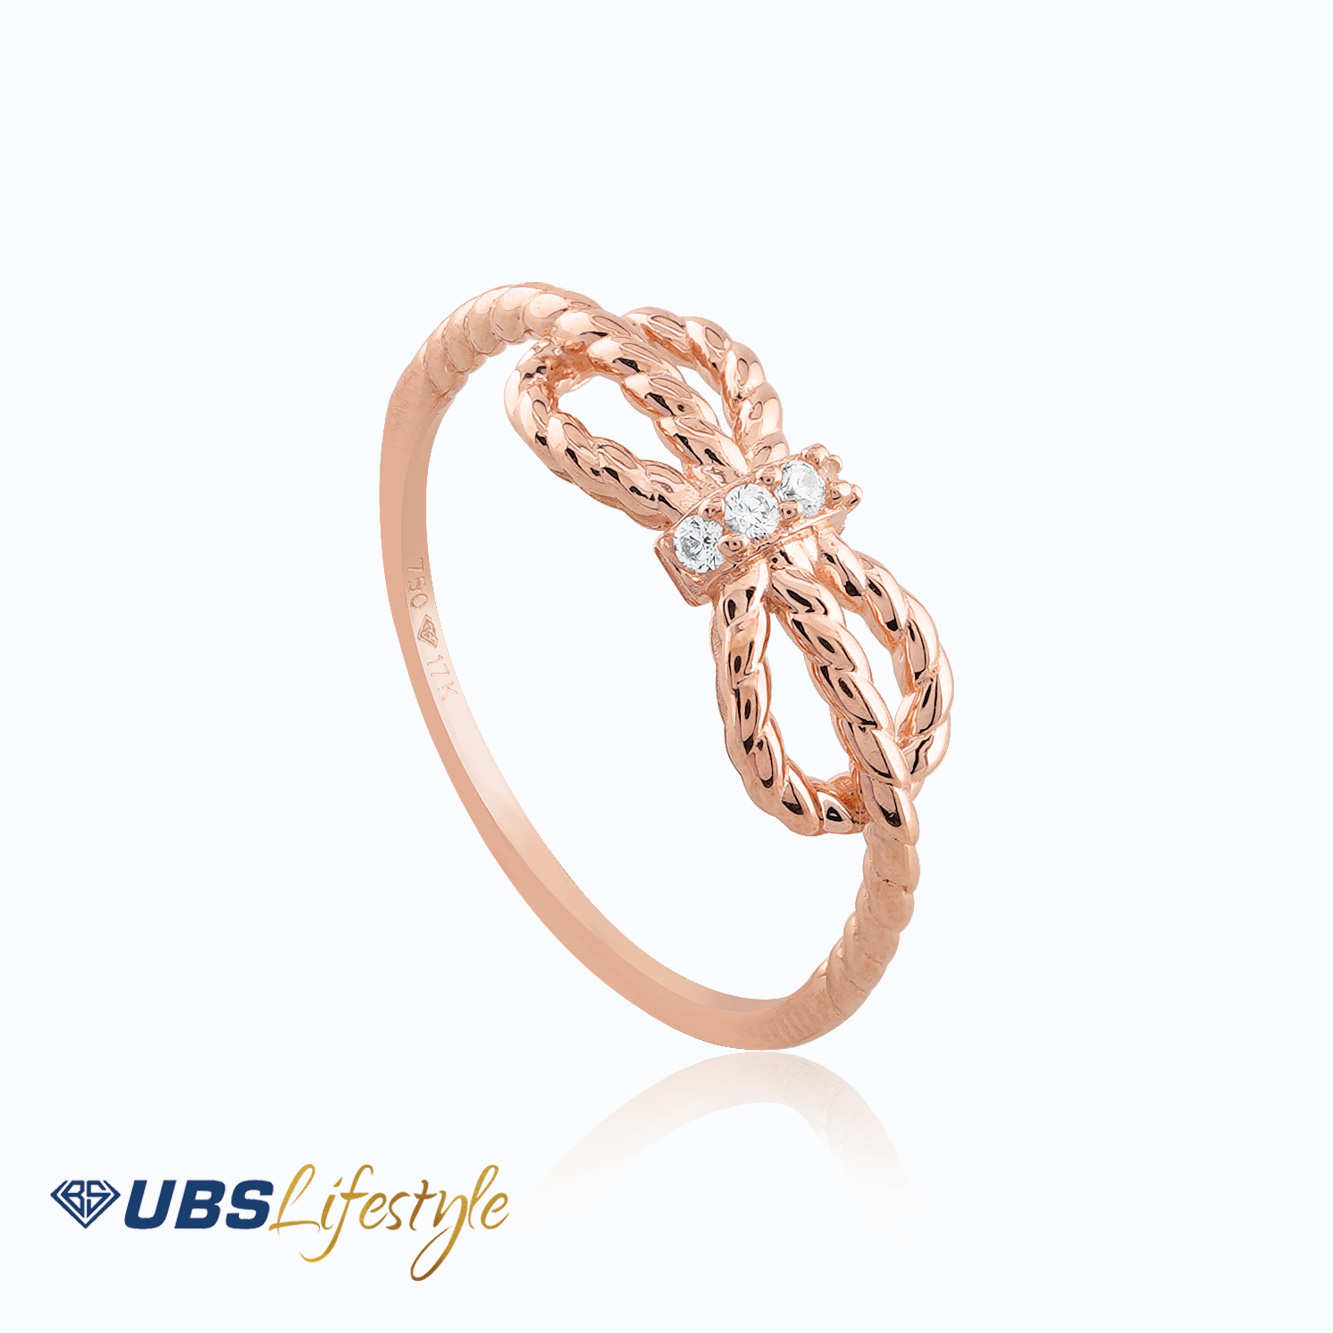 UBS Cincin Emas Knot - Ksc0859R - 17K